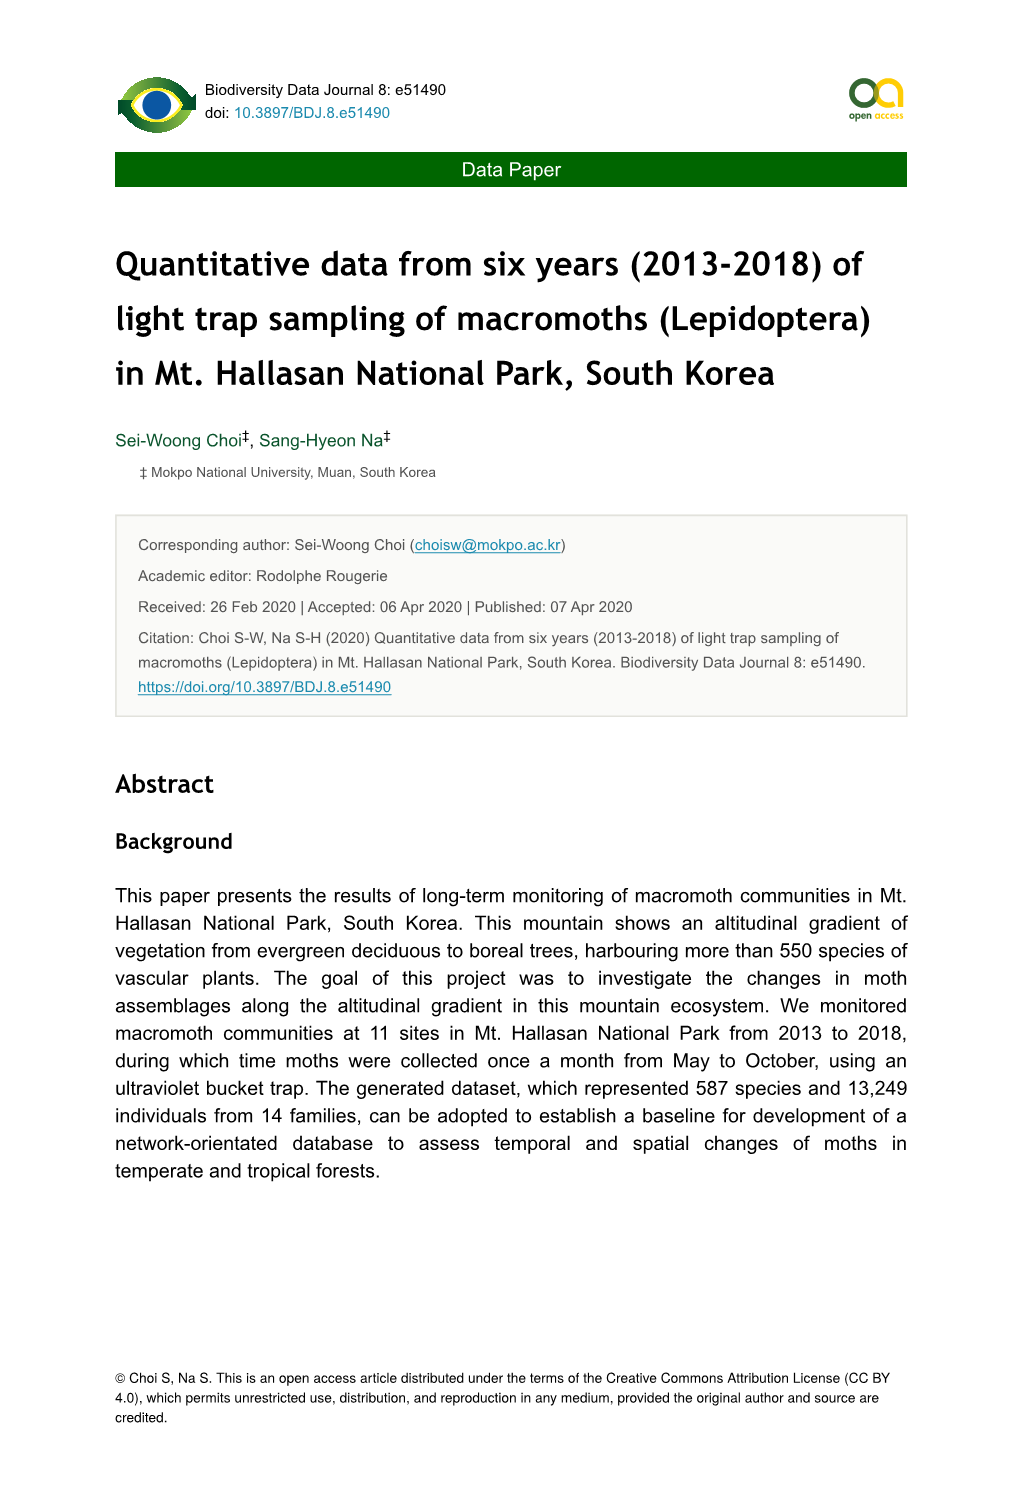 Quantitative Data from Six Years (2013-2018) of Light Trap Sampling of Macromoths (Lepidoptera) in Mt. Hallasan National Park, South Korea